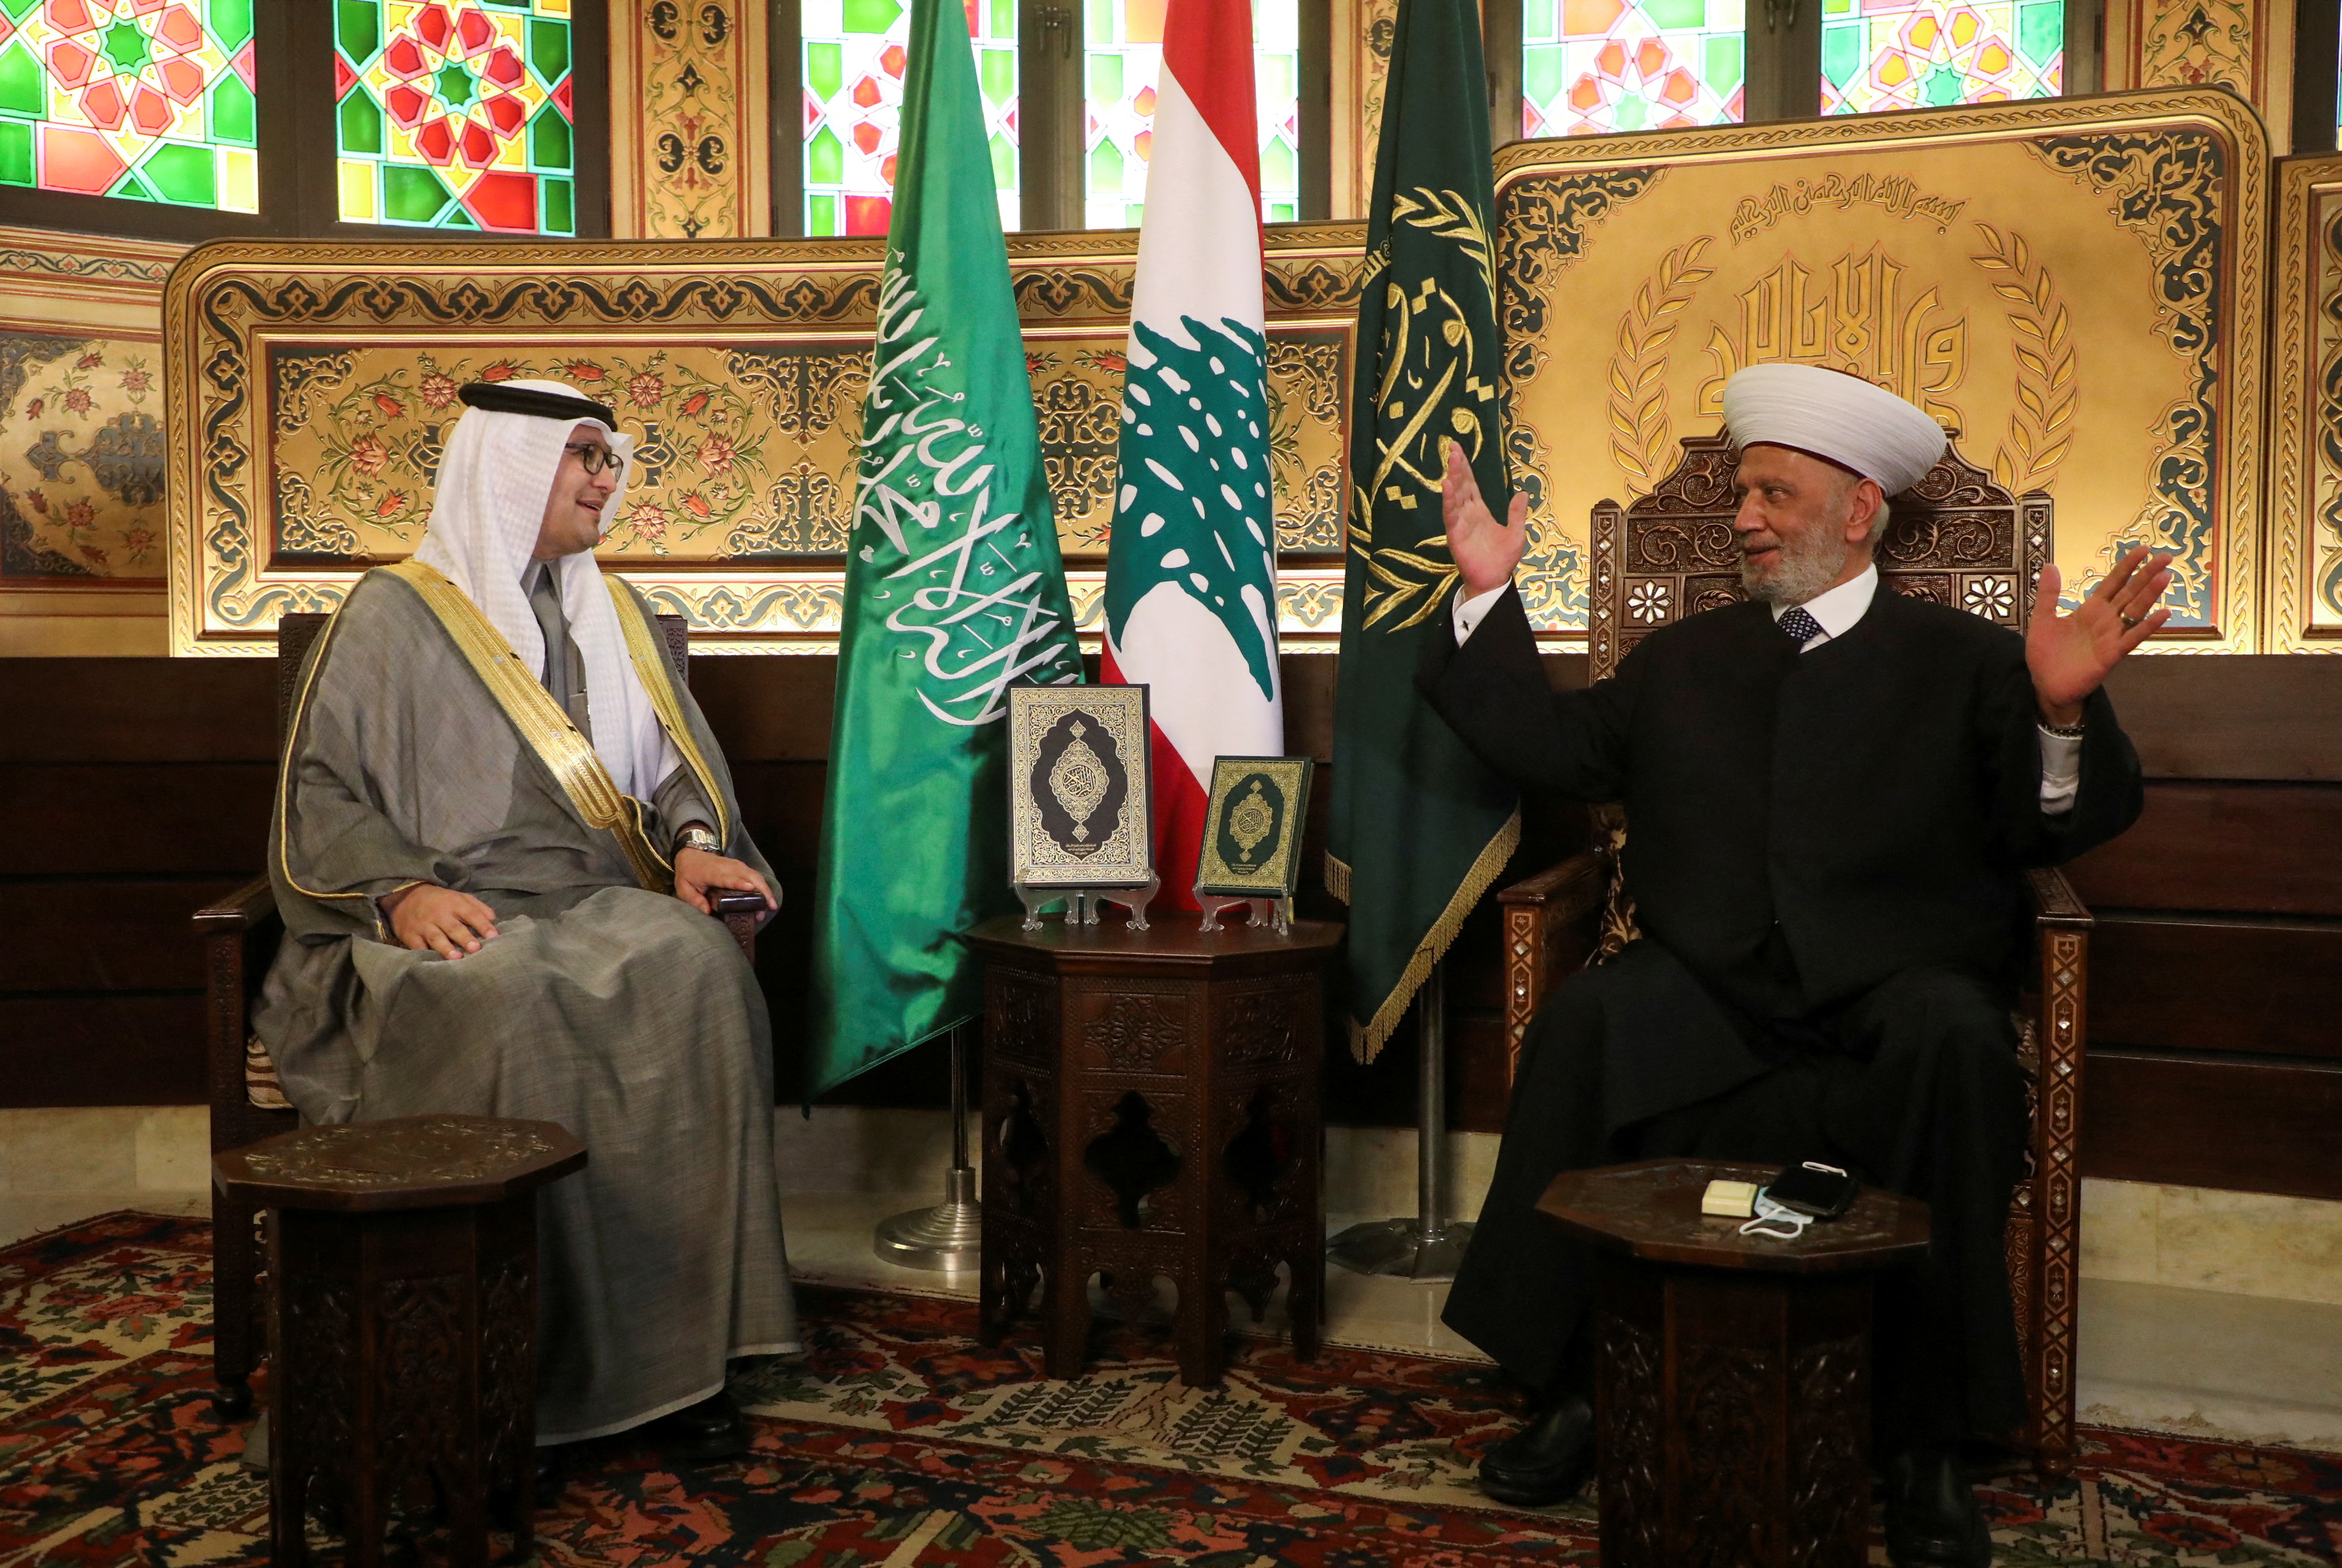 Saudi Ambassador to Lebanon Walid bin Abdullah Bukhari meets with the Grand Mufti Sheikh Abdul Latif Derian, in Beirut